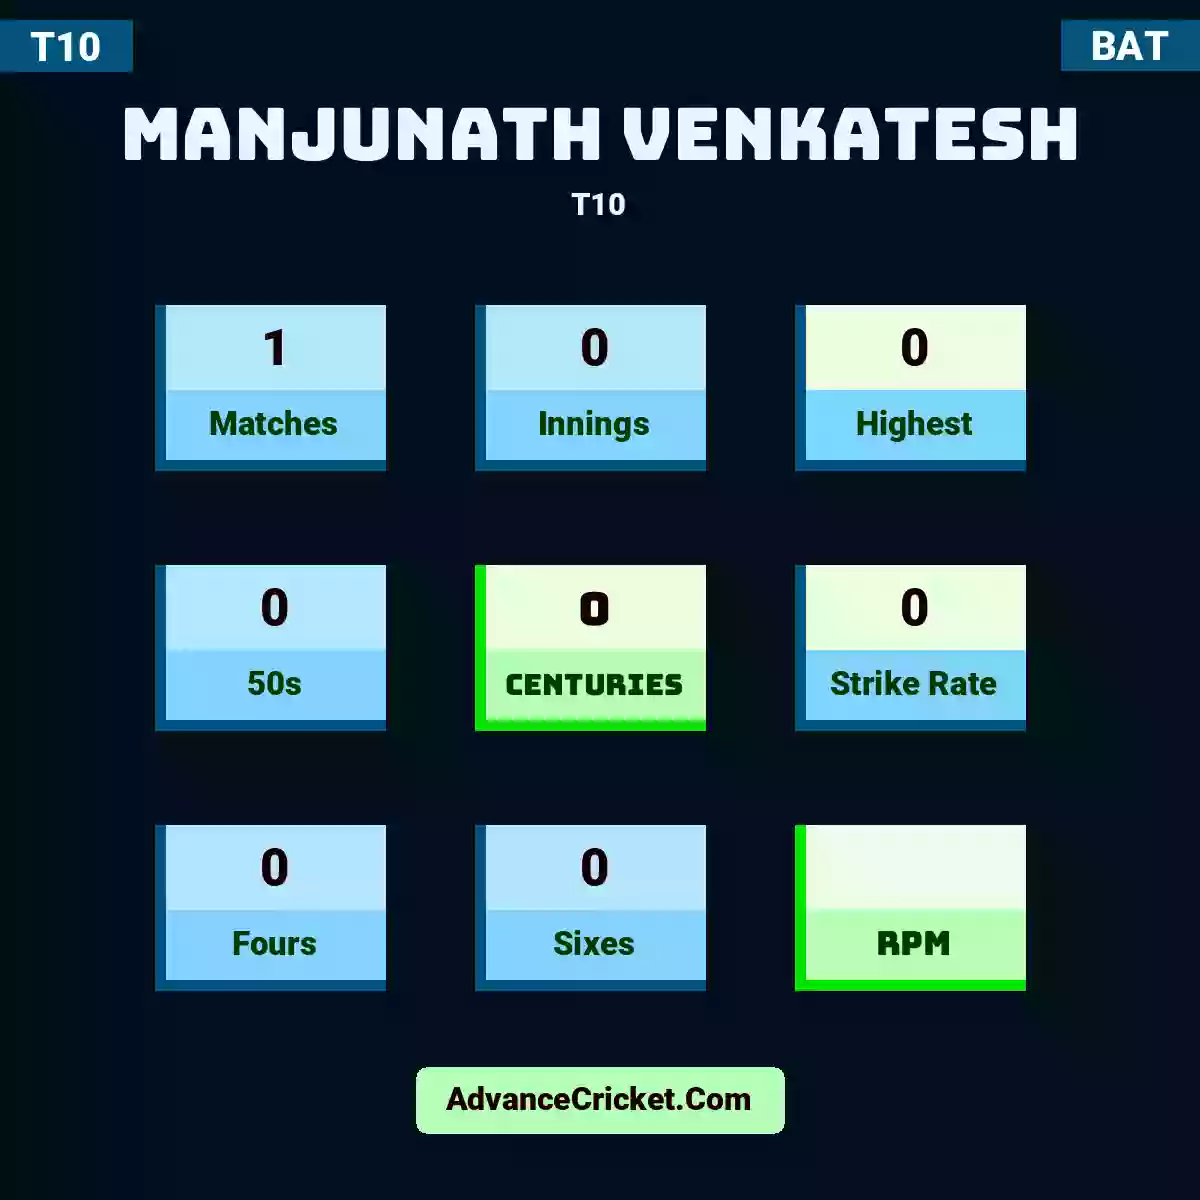 Manjunath Venkatesh T10 , Manjunath Venkatesh played 1 matches, scored 0 runs as highest, 0 half-centuries, and 0 centuries, with a strike rate of 0. M.Venkatesh hit 0 fours and 0 sixes.